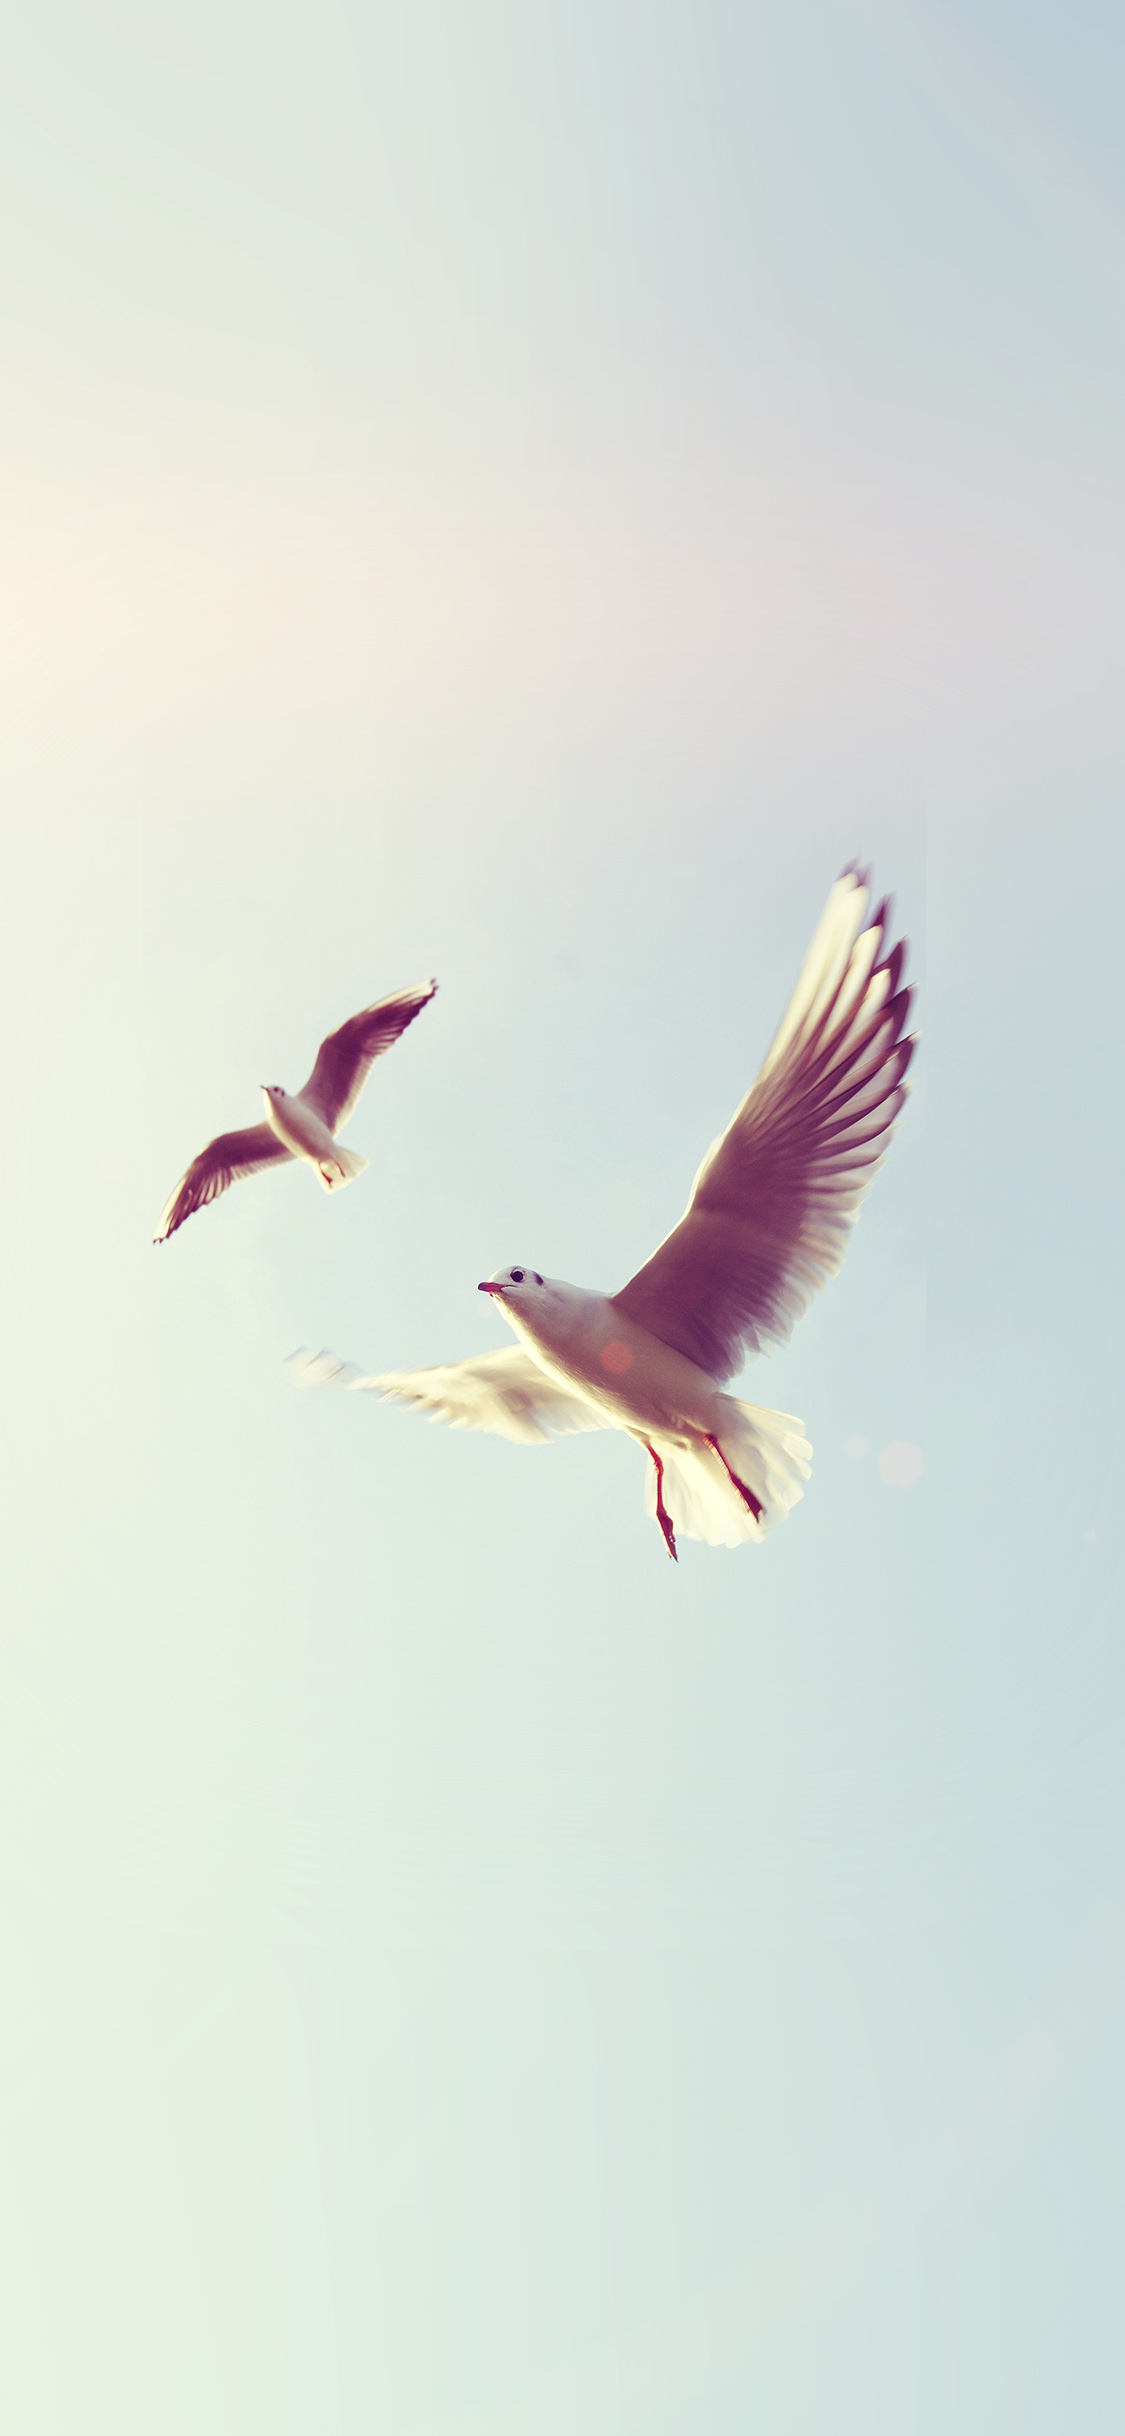 iPhone X wallpaper. pigeons bird fly sky animal nature minimal flare